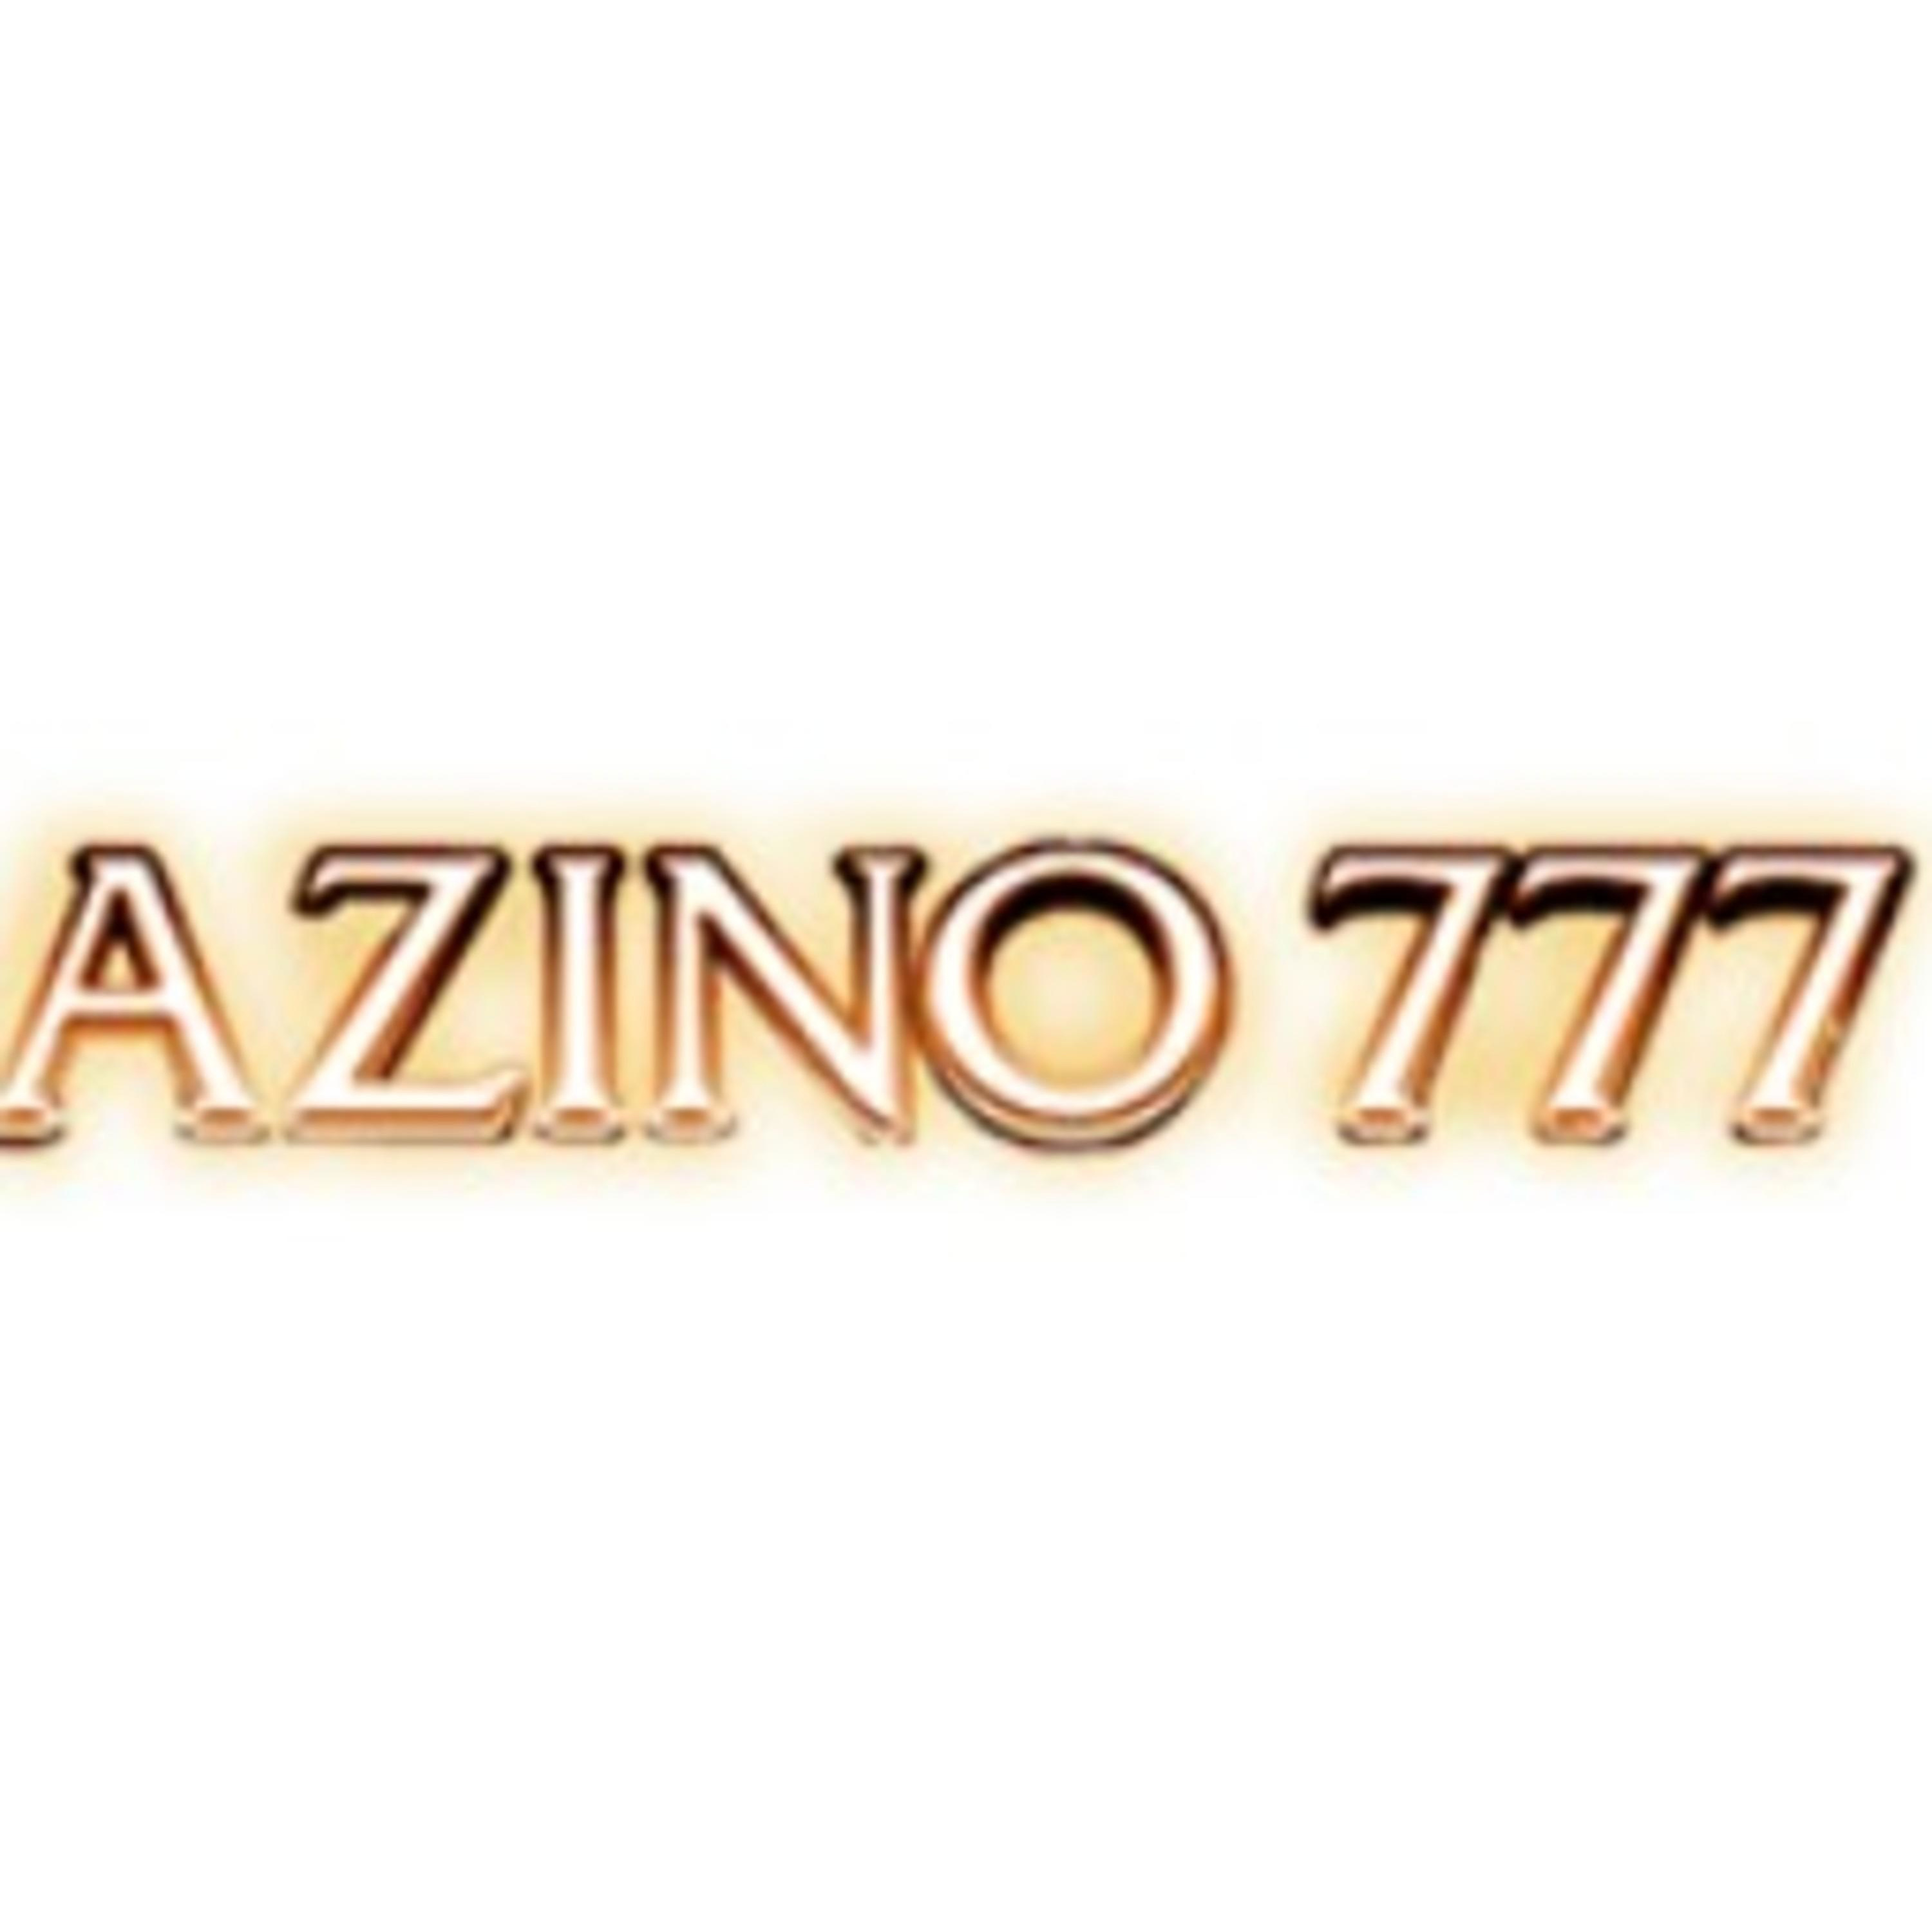 Azino777 azino777top casino. Азино логотип. Азино 77. Логотип казино 777. Azino 777 лого.